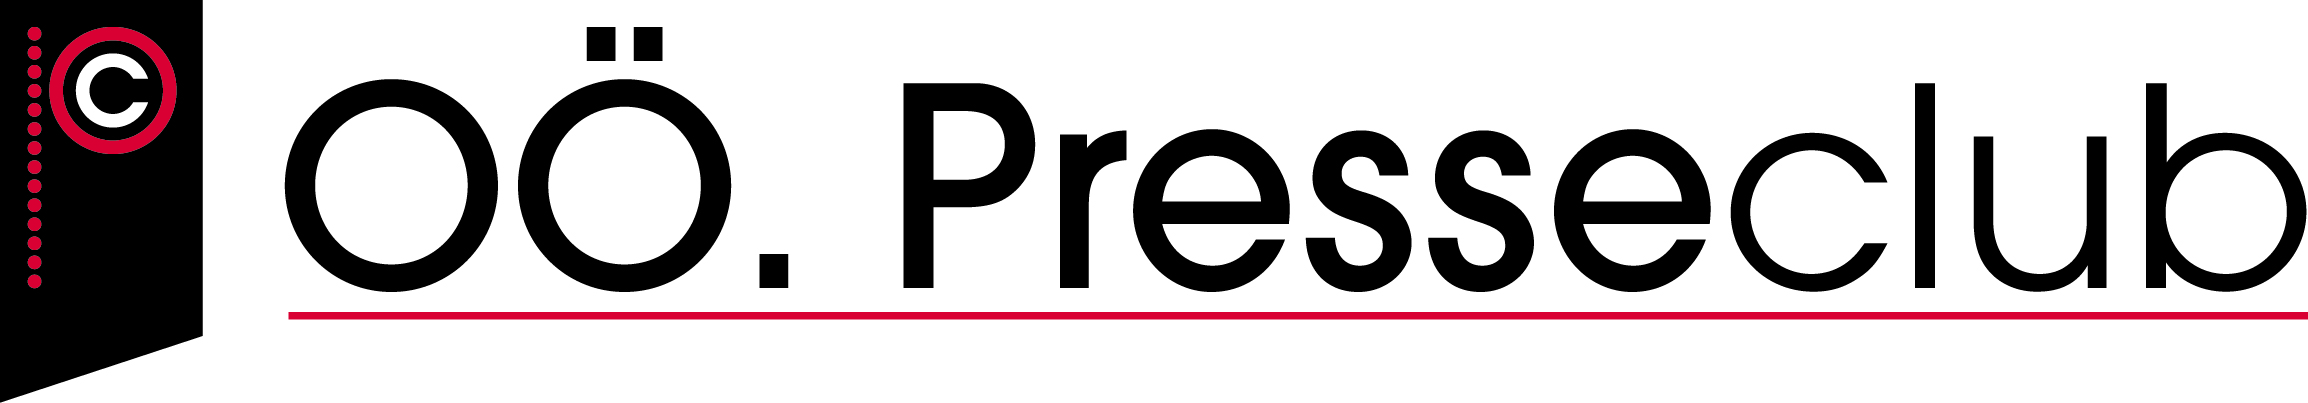 Logo_OOE_Presseclub_quer